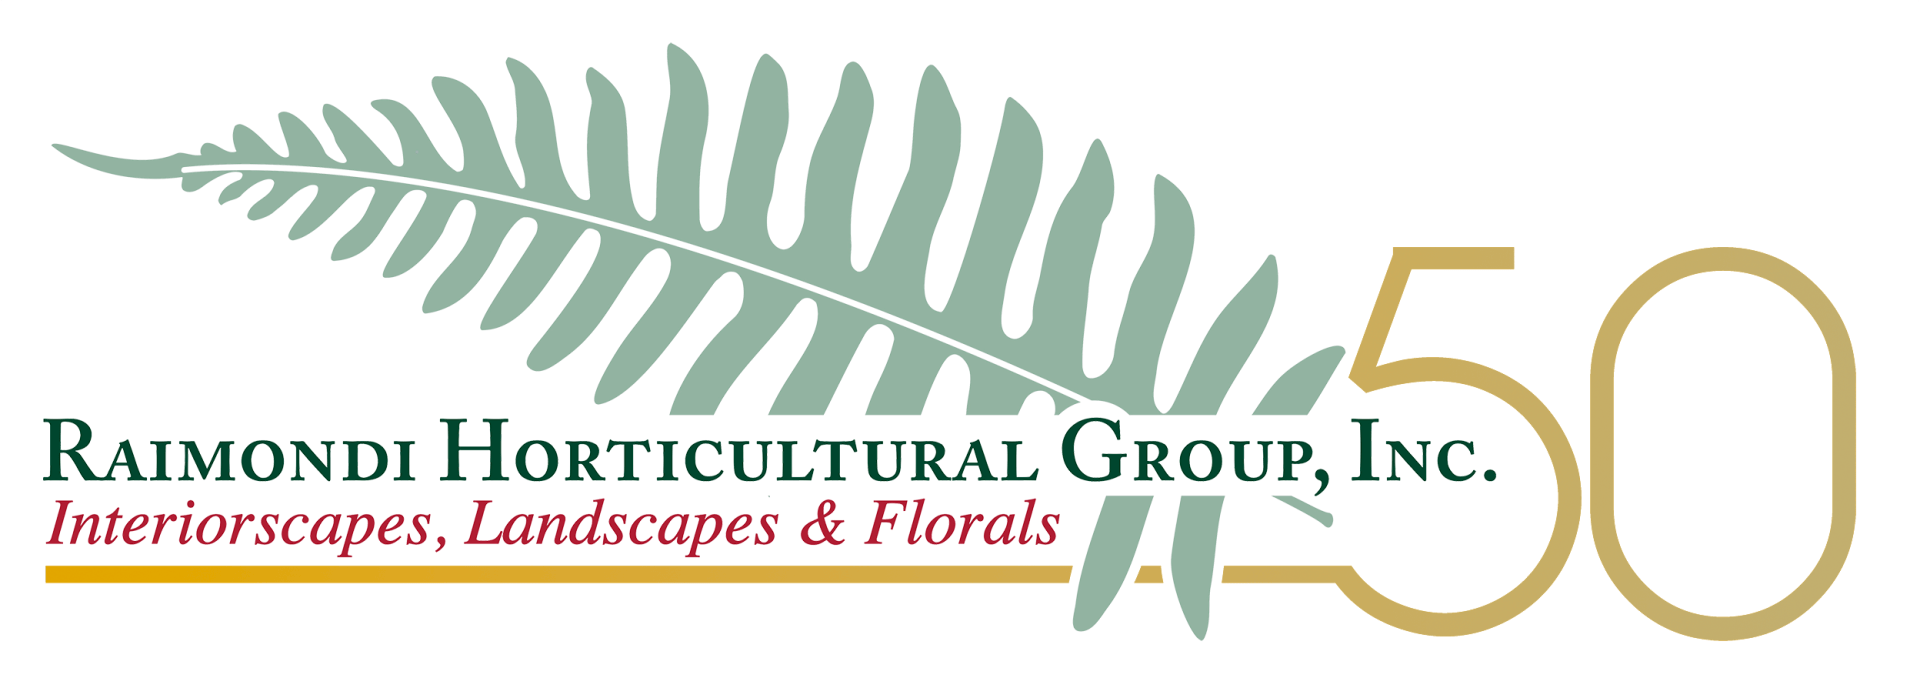 Raimondi Horticultural Group, Inc